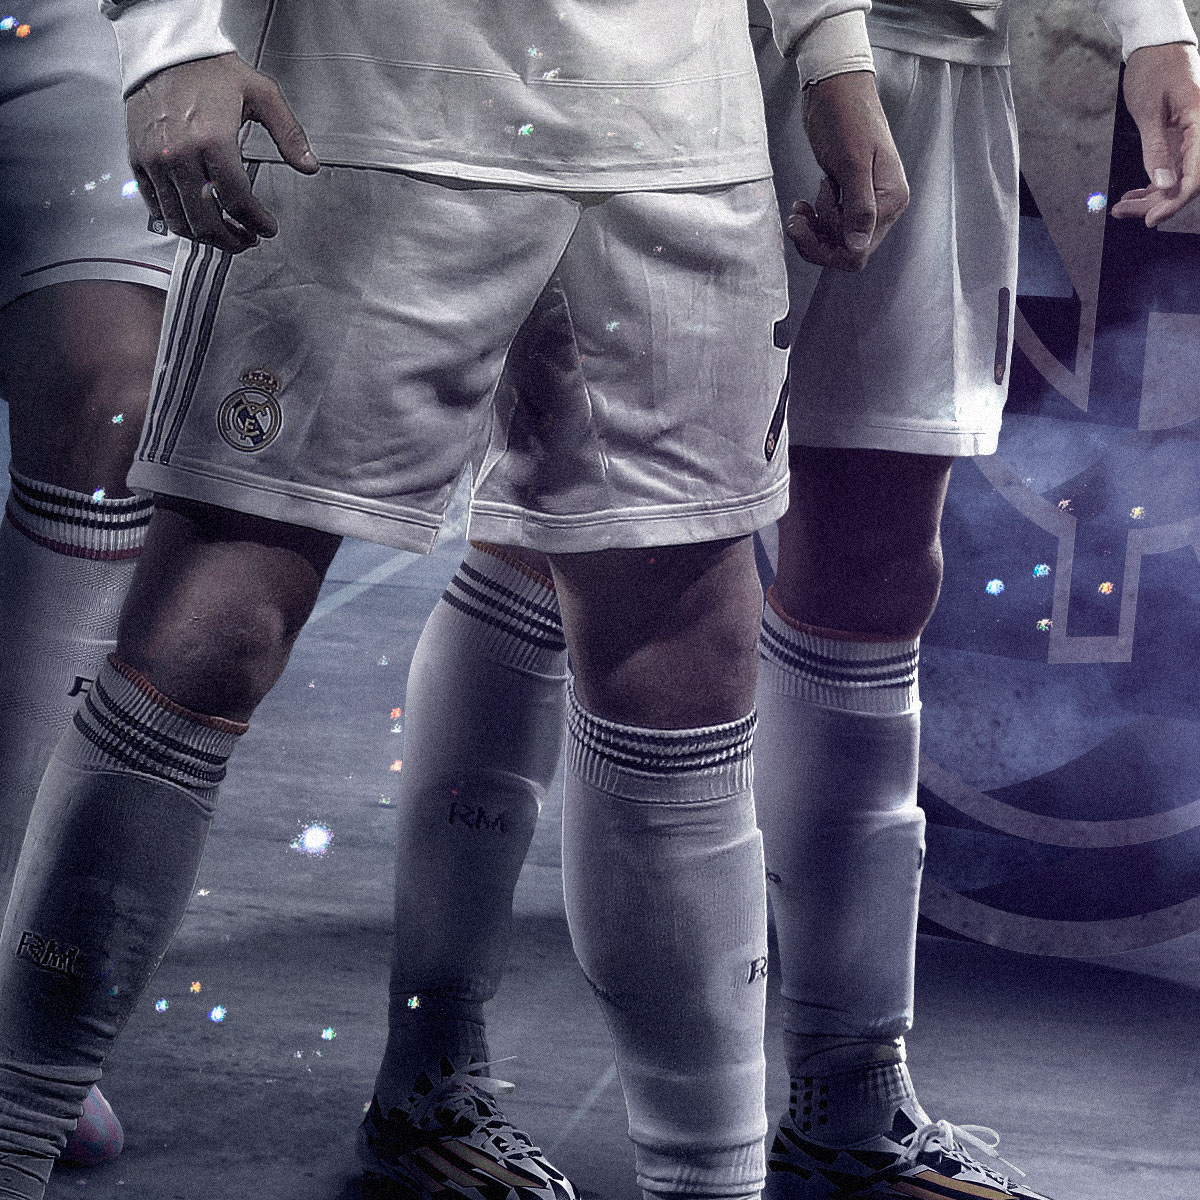 NC+ el clasico soccer Futbol spain Spanish League messi Ronaldo bale rodriguez Suarez Neymar bet facebook